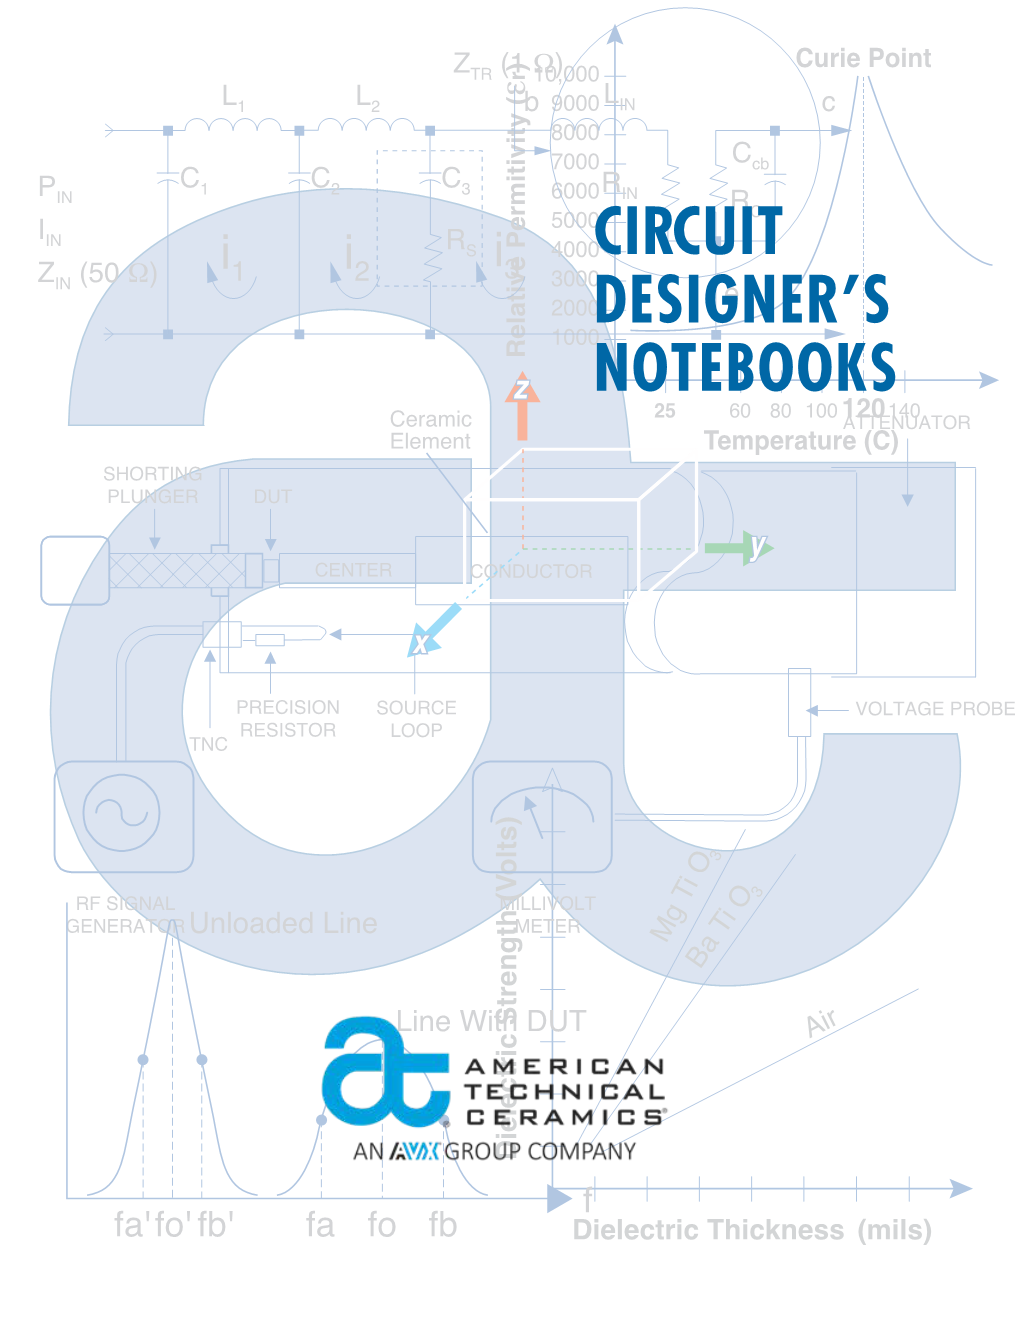 Complete Circuit Designer's Notebook